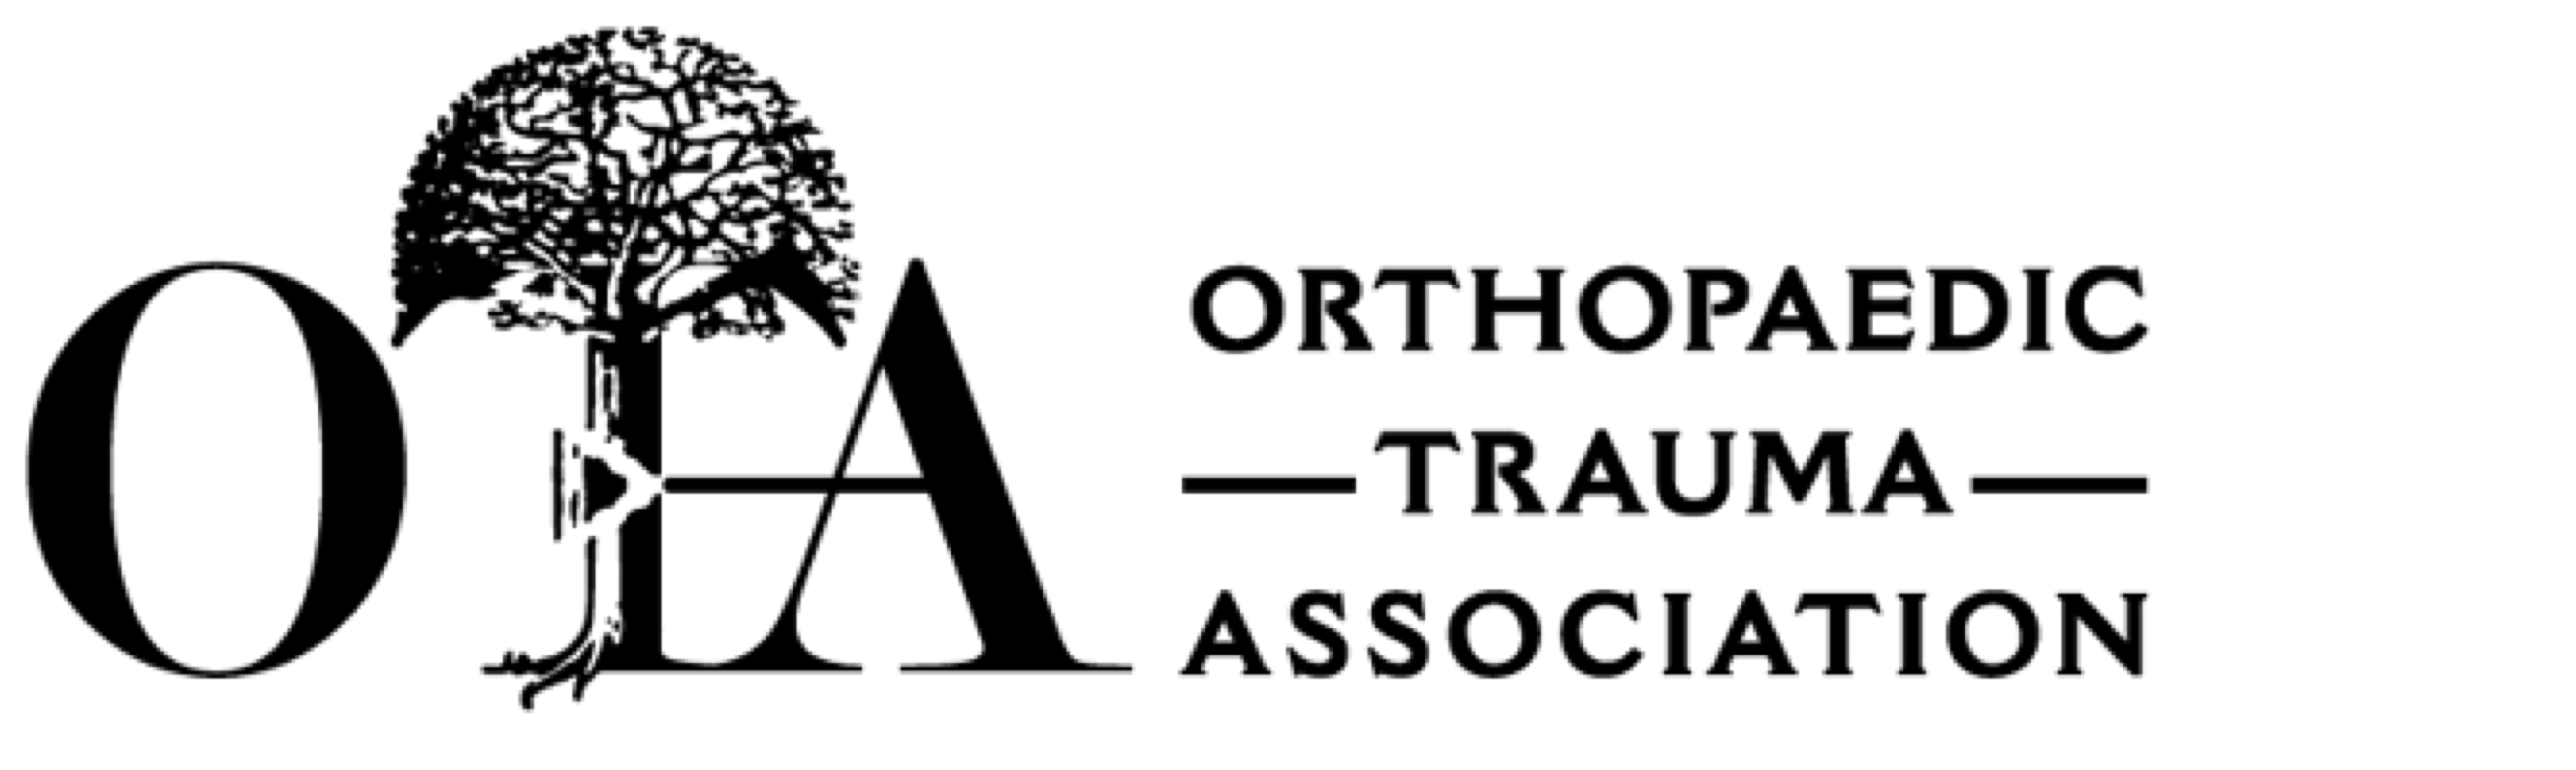 Orthopaedic Trauma Association Textbook logo